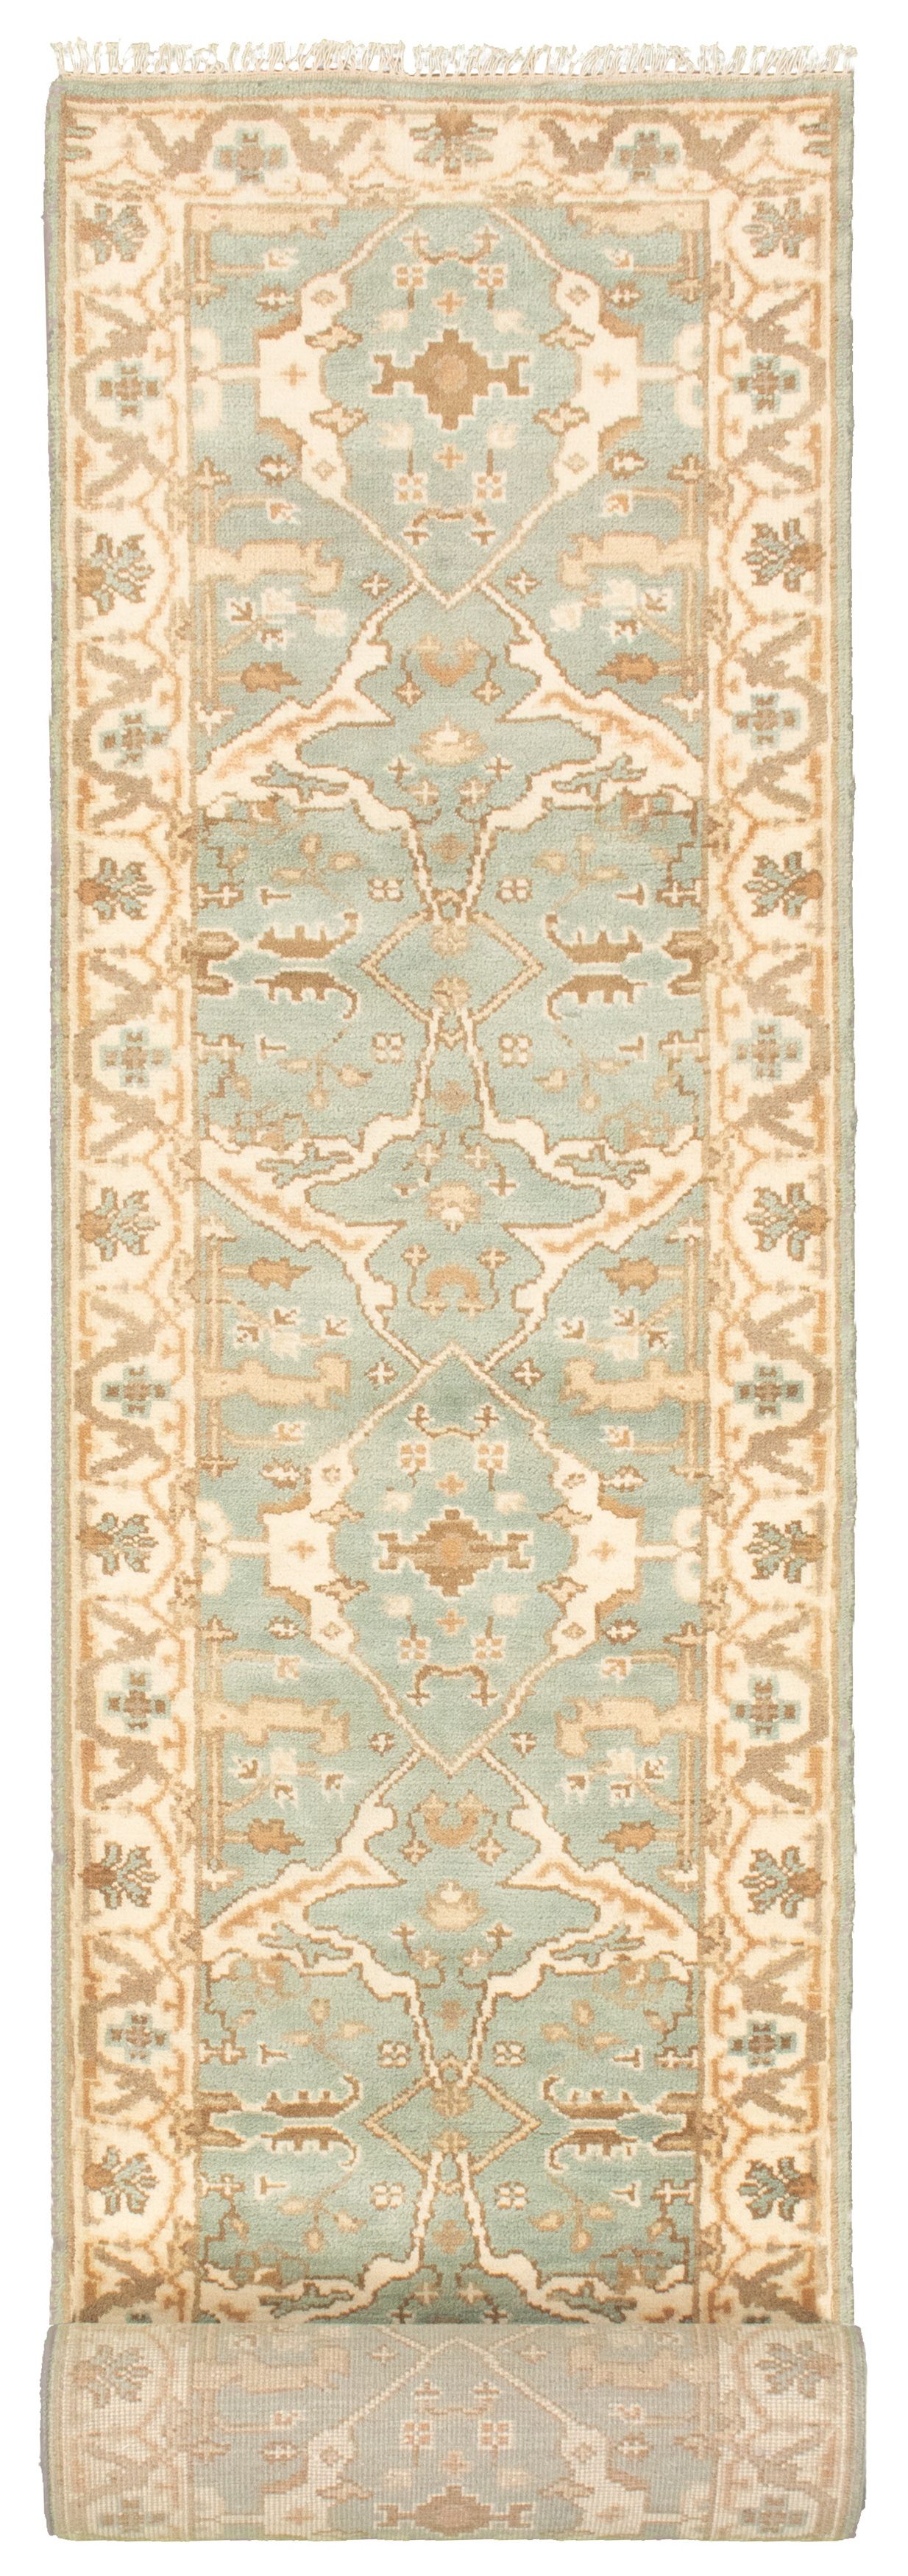 Hand-knotted Royal Ushak Turquoise Wool Rug 2'8" x 19'10" Size: 2'8" x 19'10"  